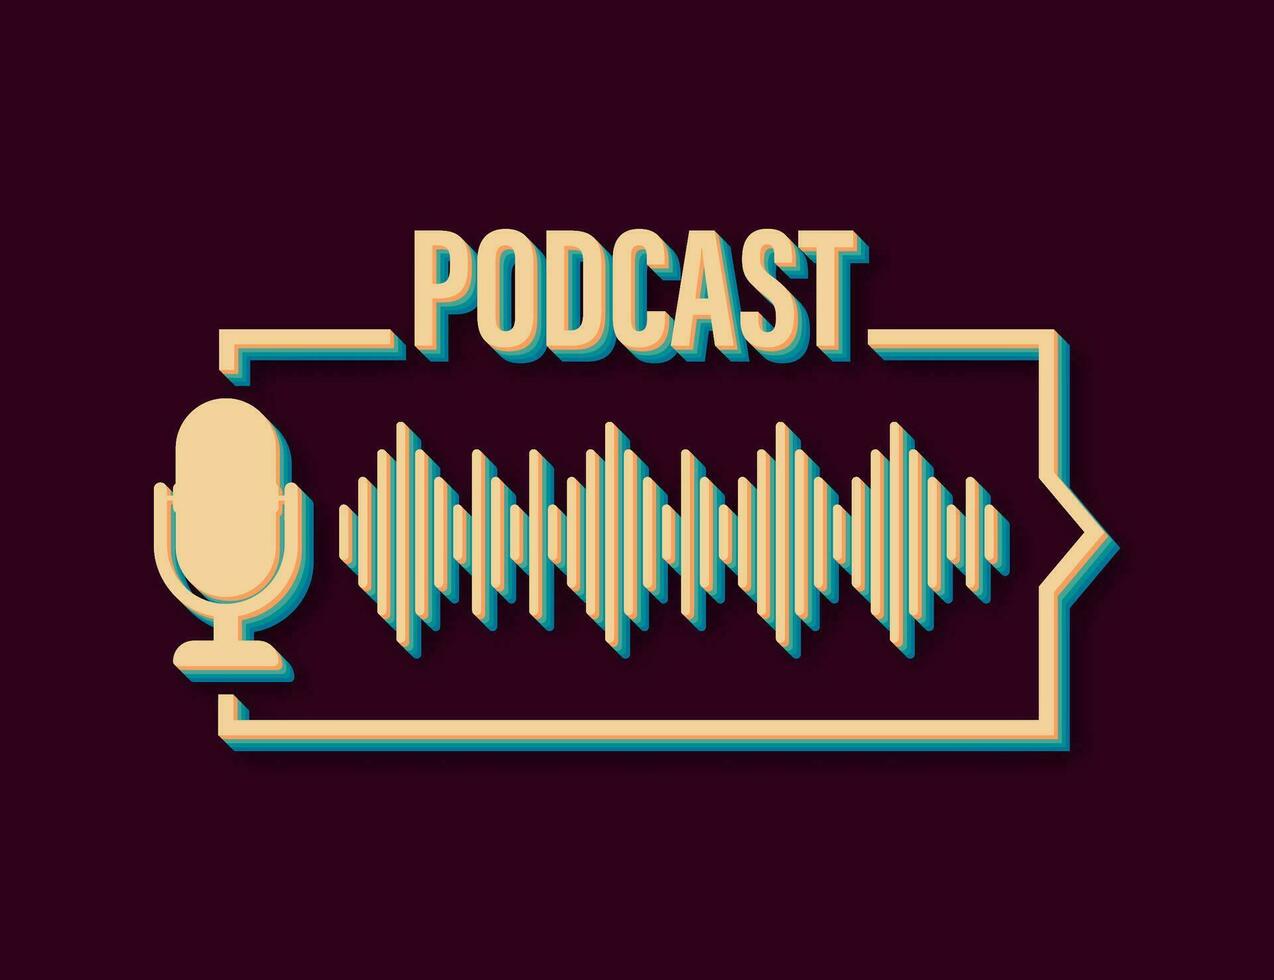 Podcast retro style icon. Badge, icon, stamp, logo Vector stock illustration